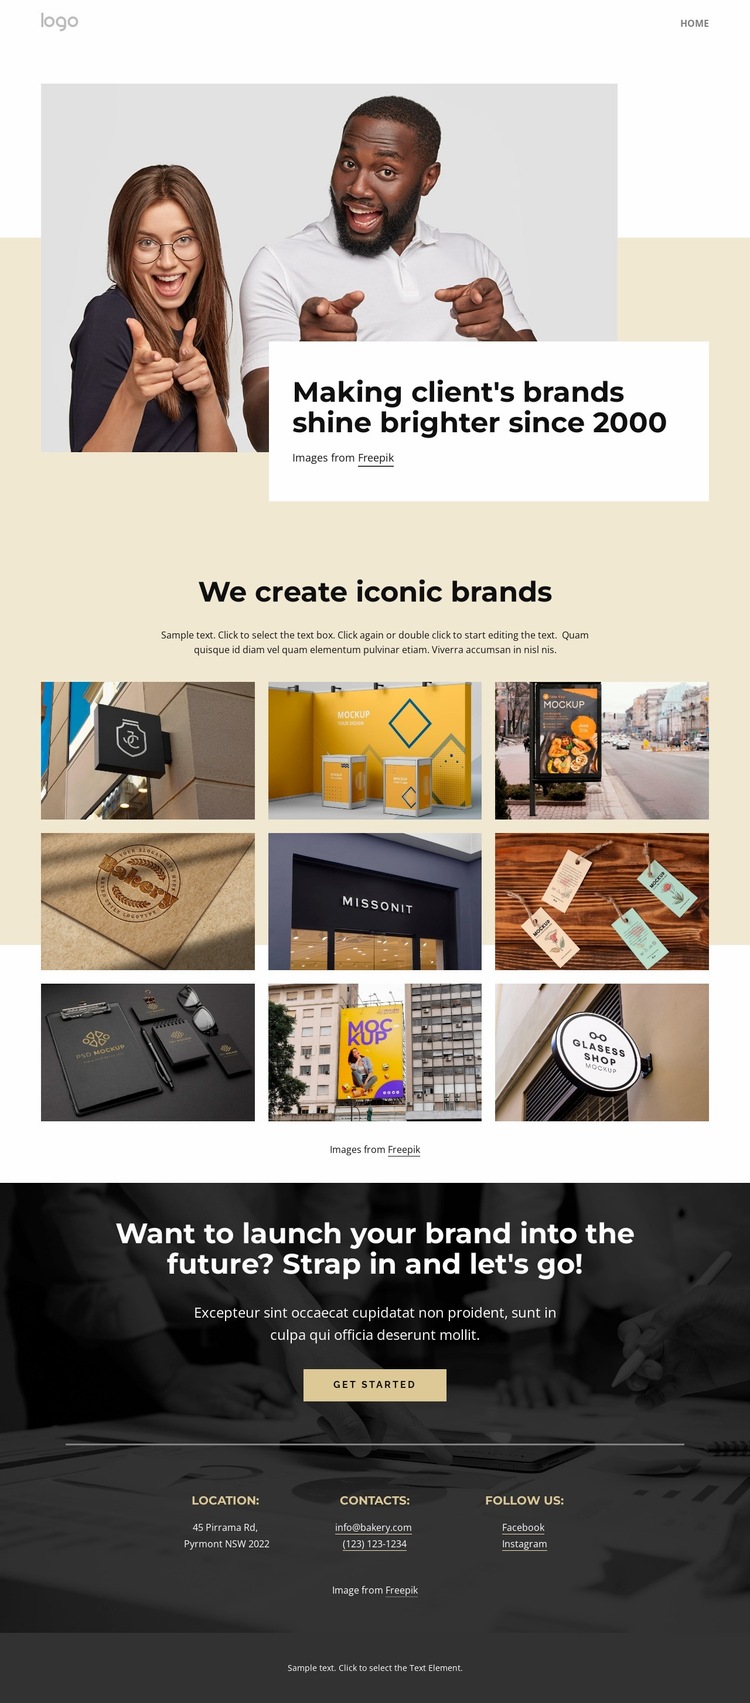 We create iconic brands Website Builder Templates